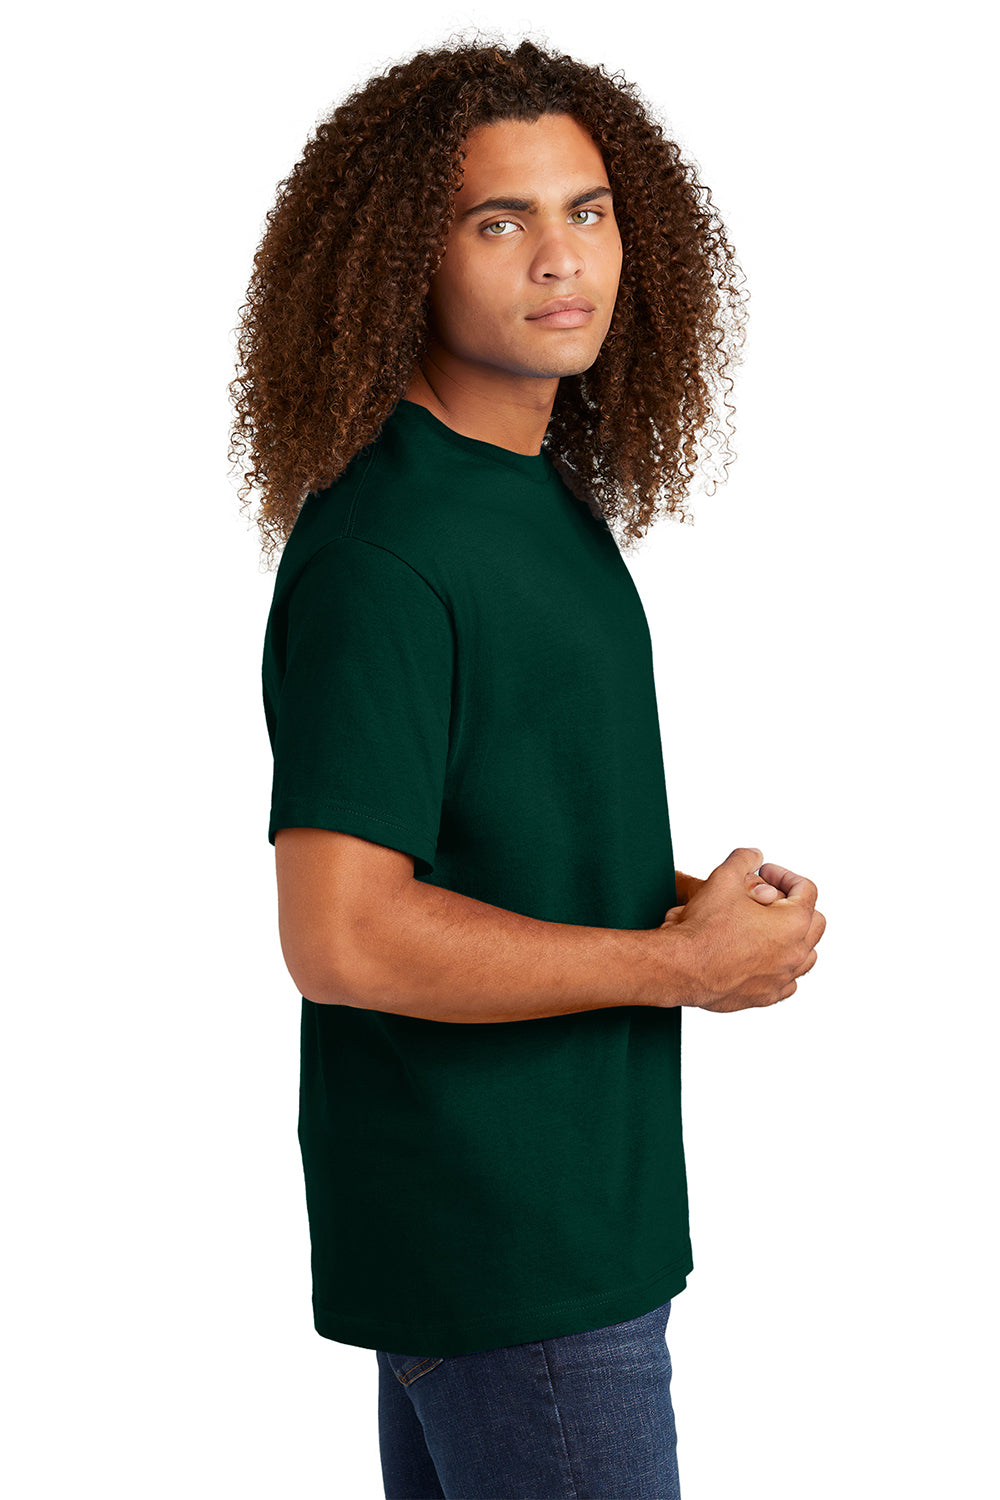 American Apparel 1301/AL1301 Mens Short Sleeve Crewneck T-Shirt Forest Green Model Side